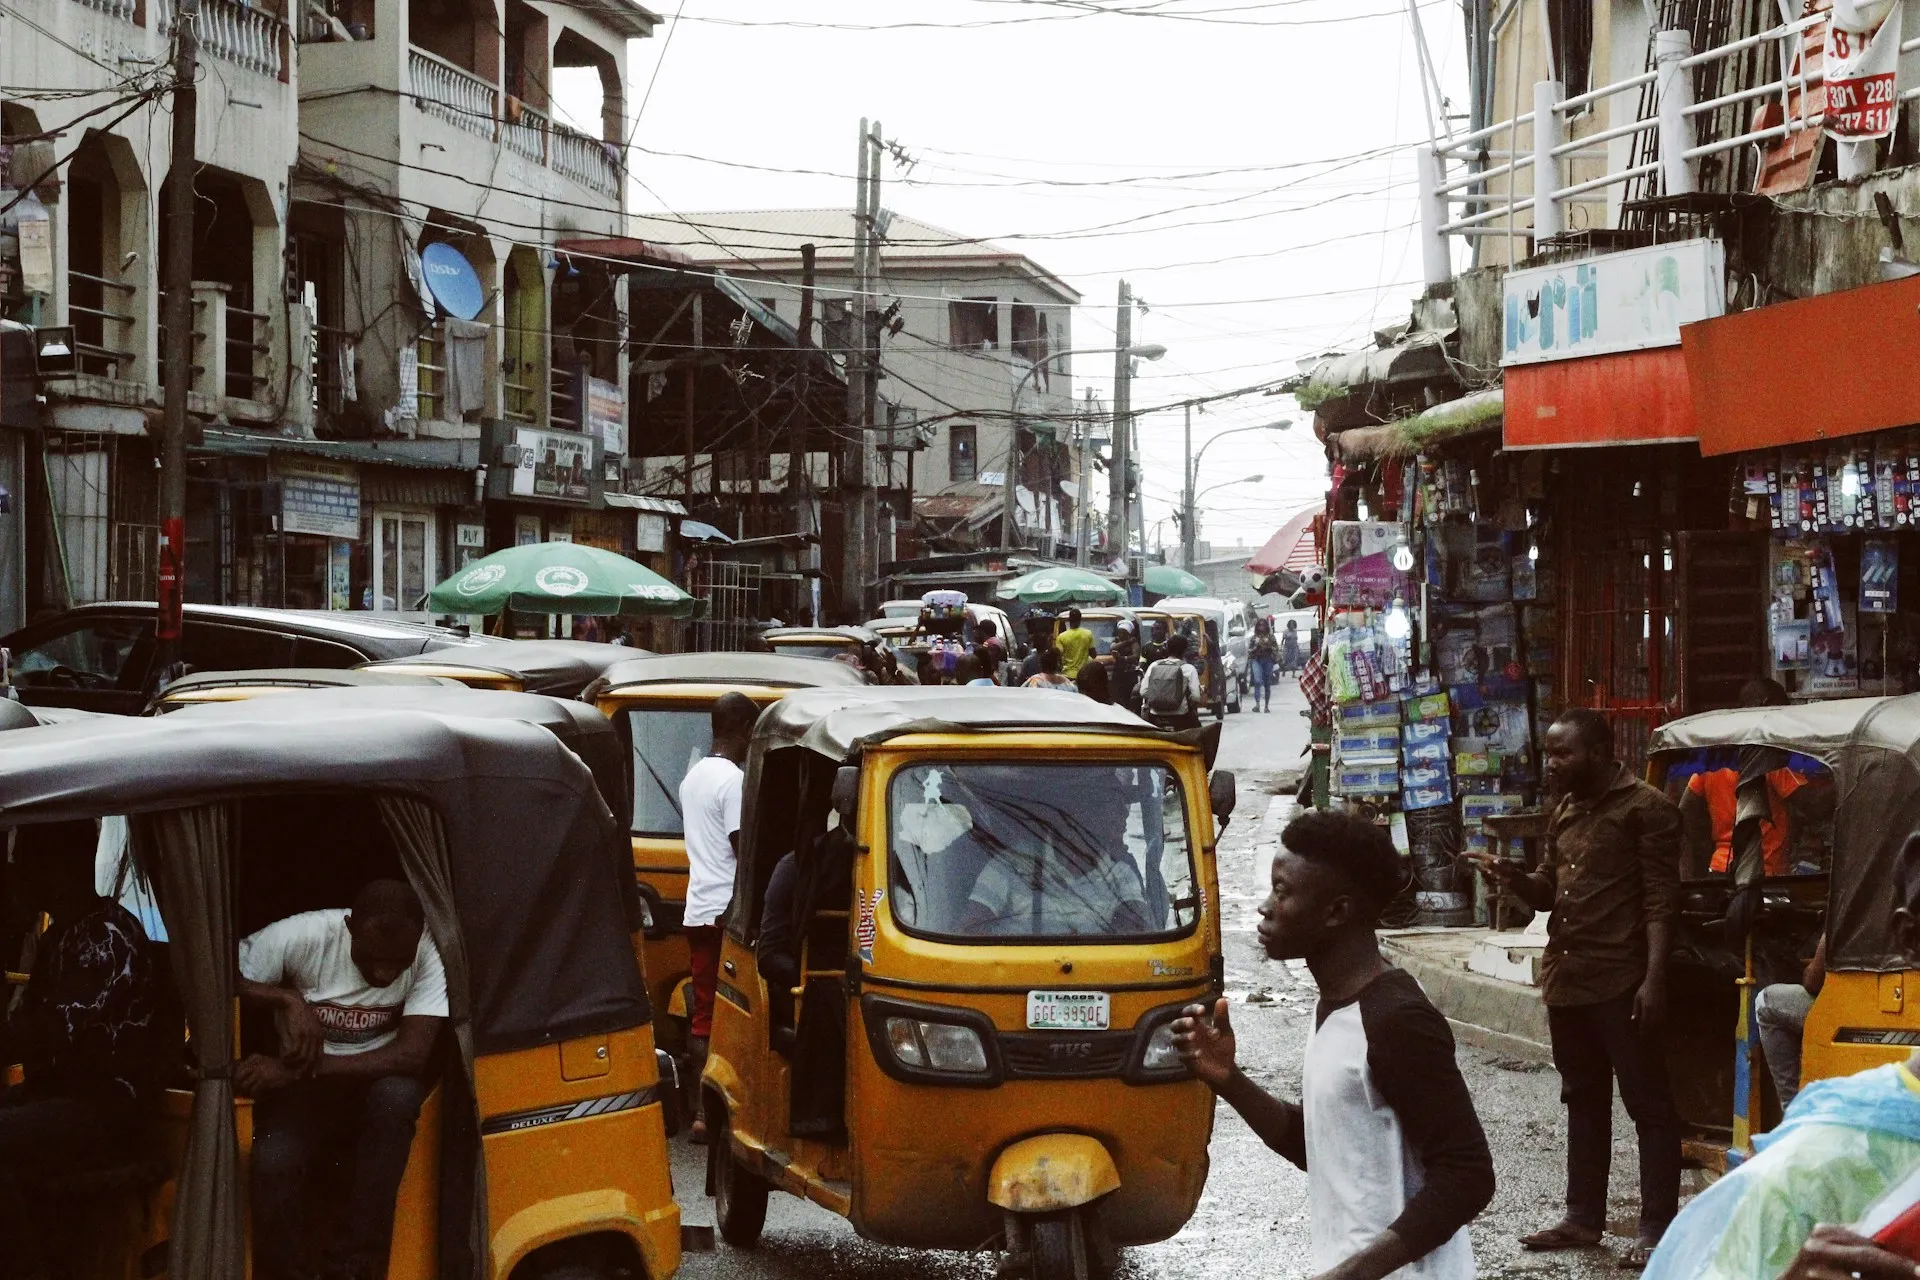 Street in Lagos. Source: Photo by Muhammad-taha on Unsplash